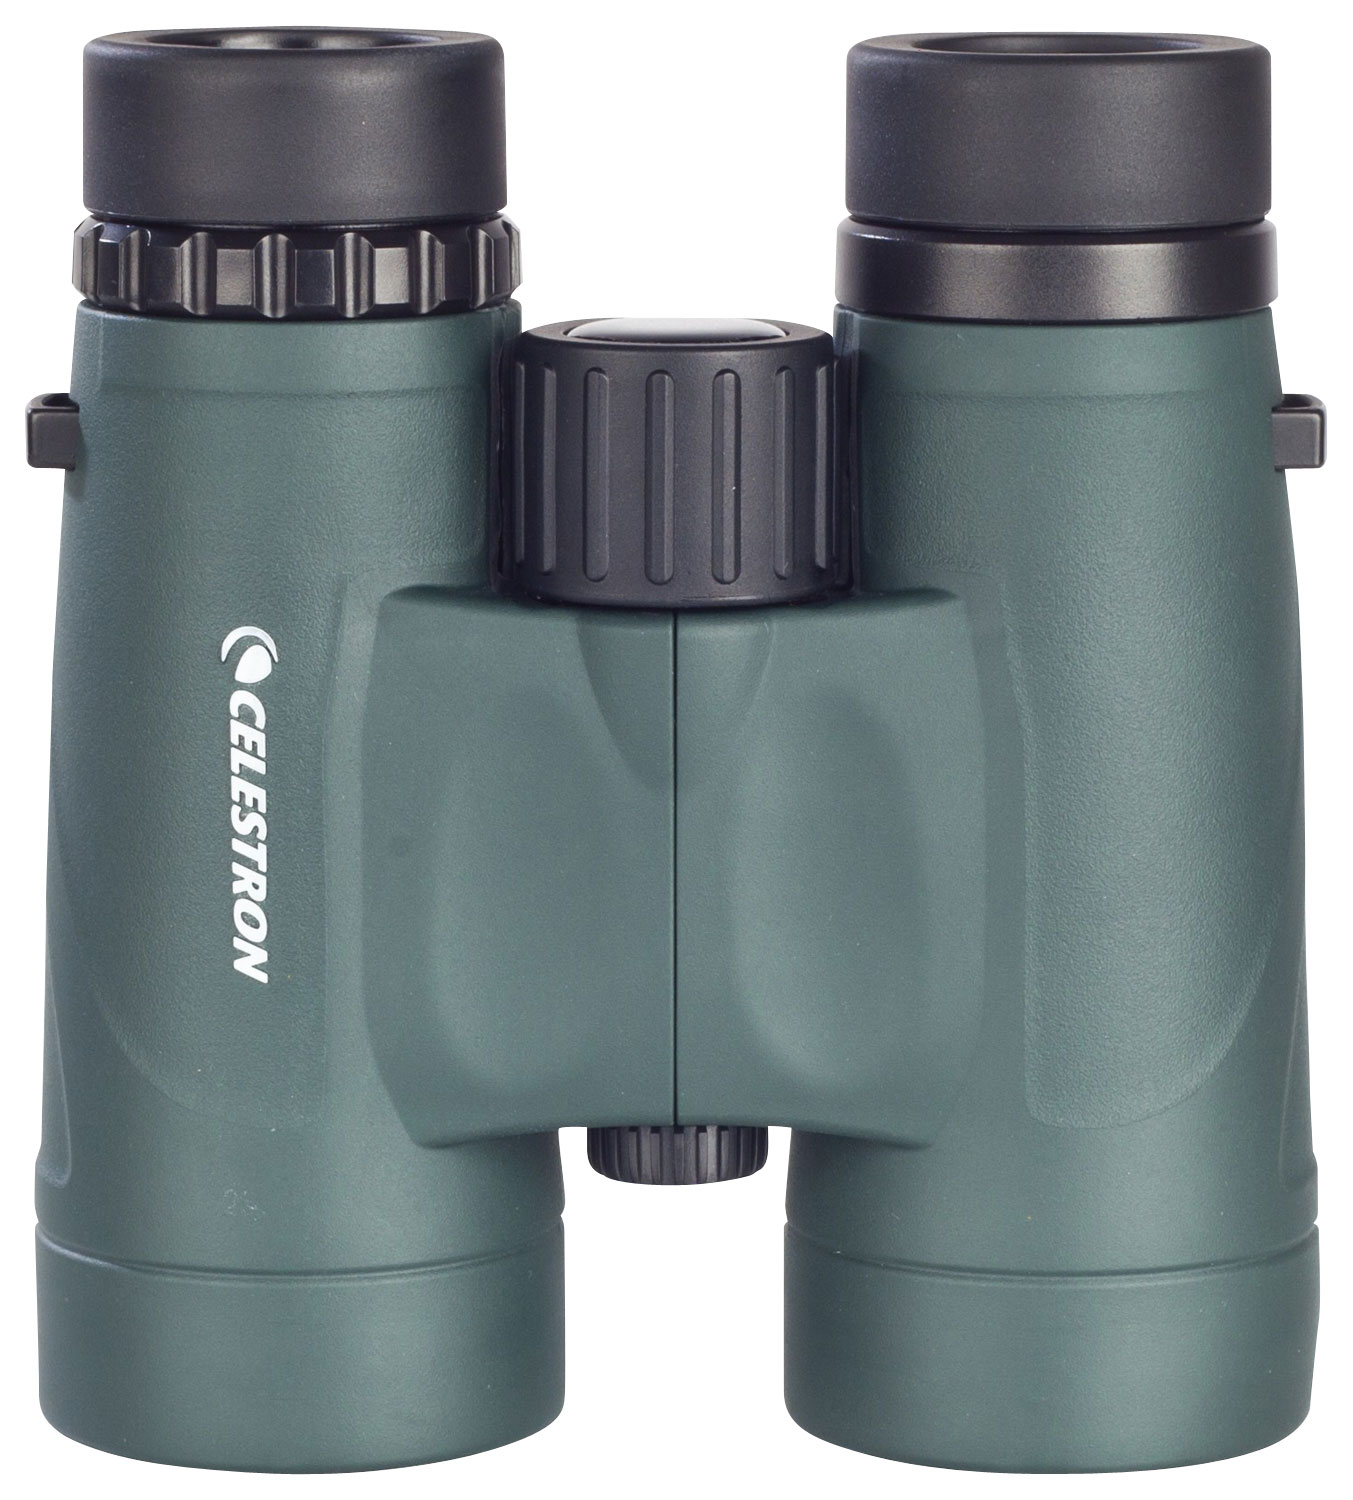 Angle View: Celestron - Nature DX 8 x 42 Waterproof Binoculars - Green